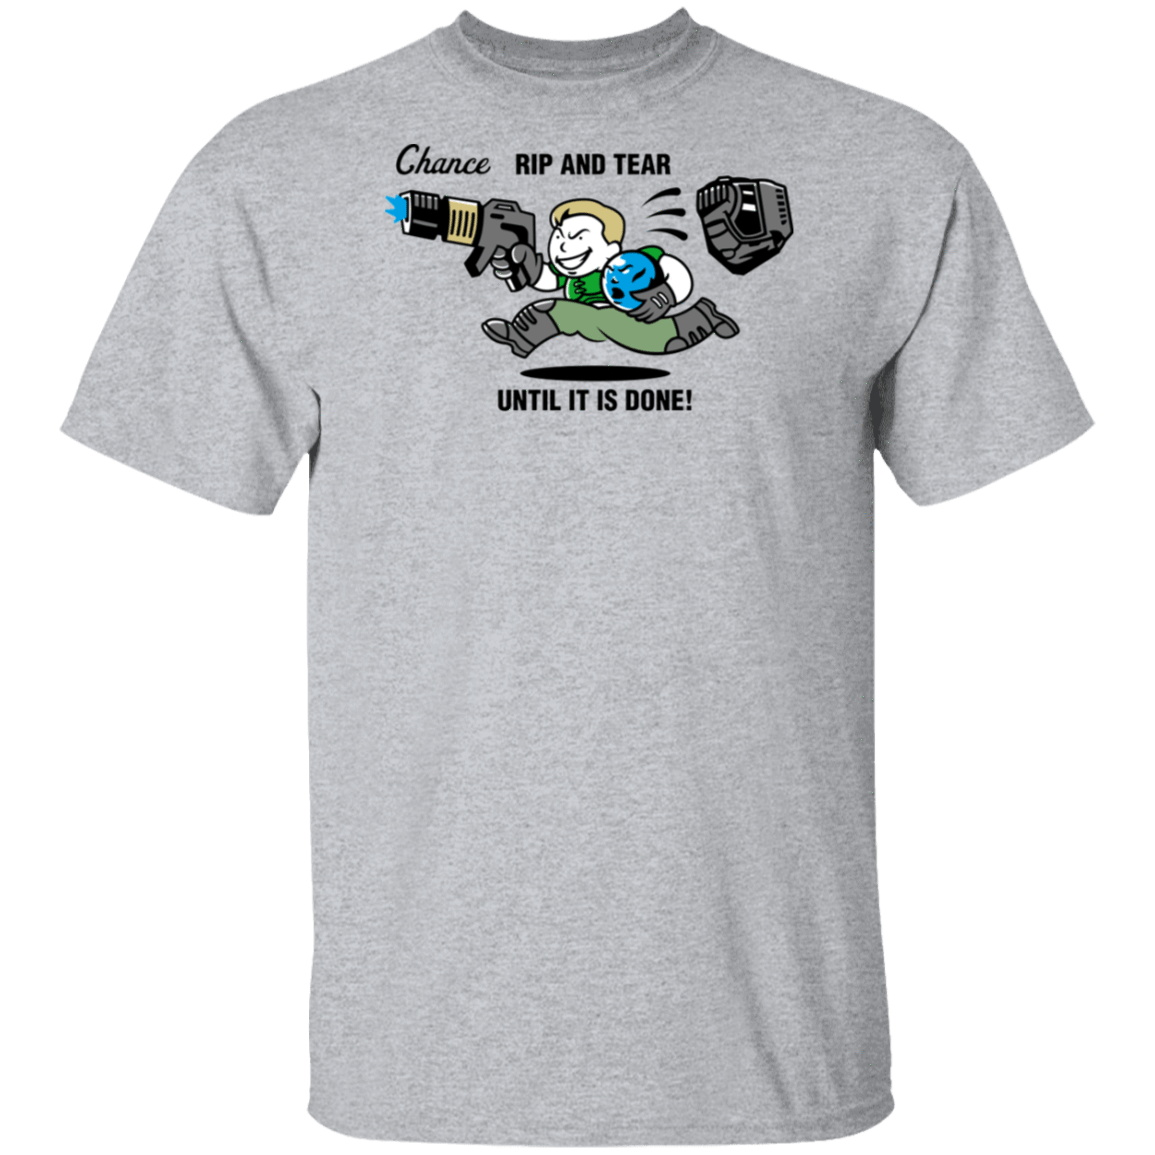 T-Shirts Sport Grey / S Doompoly T-Shirt